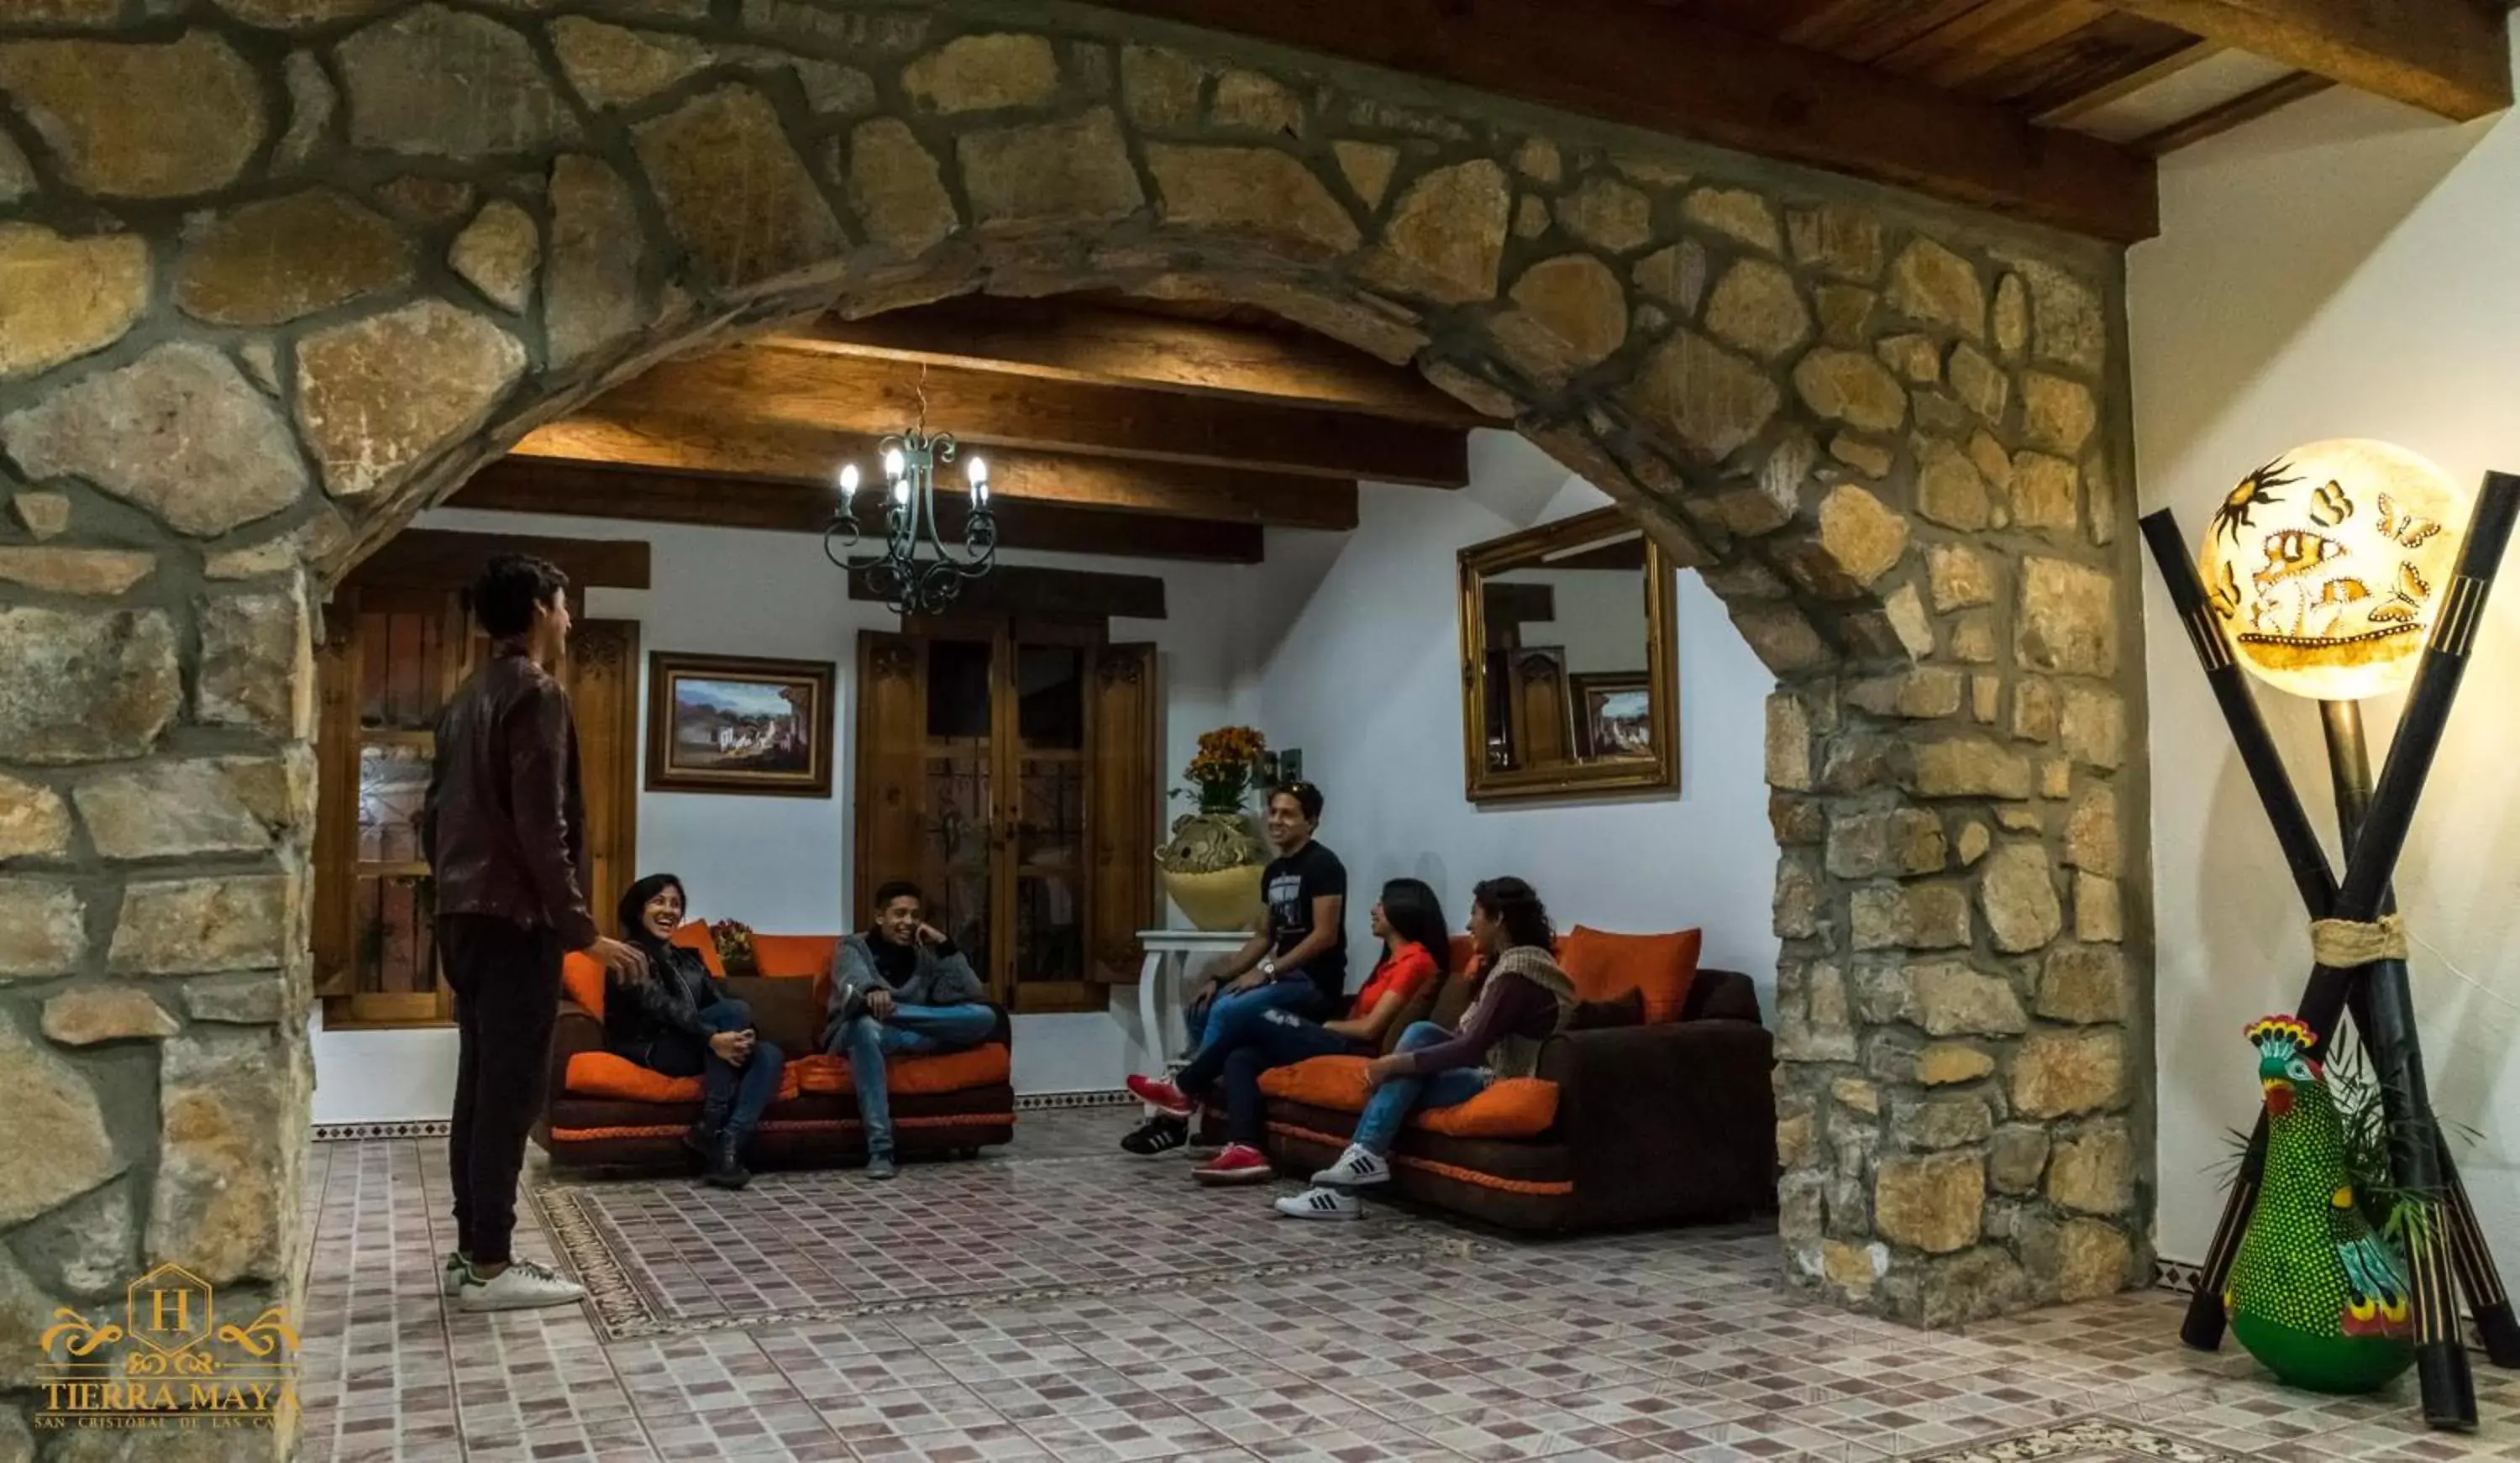 People in Hotel Tierra Maya